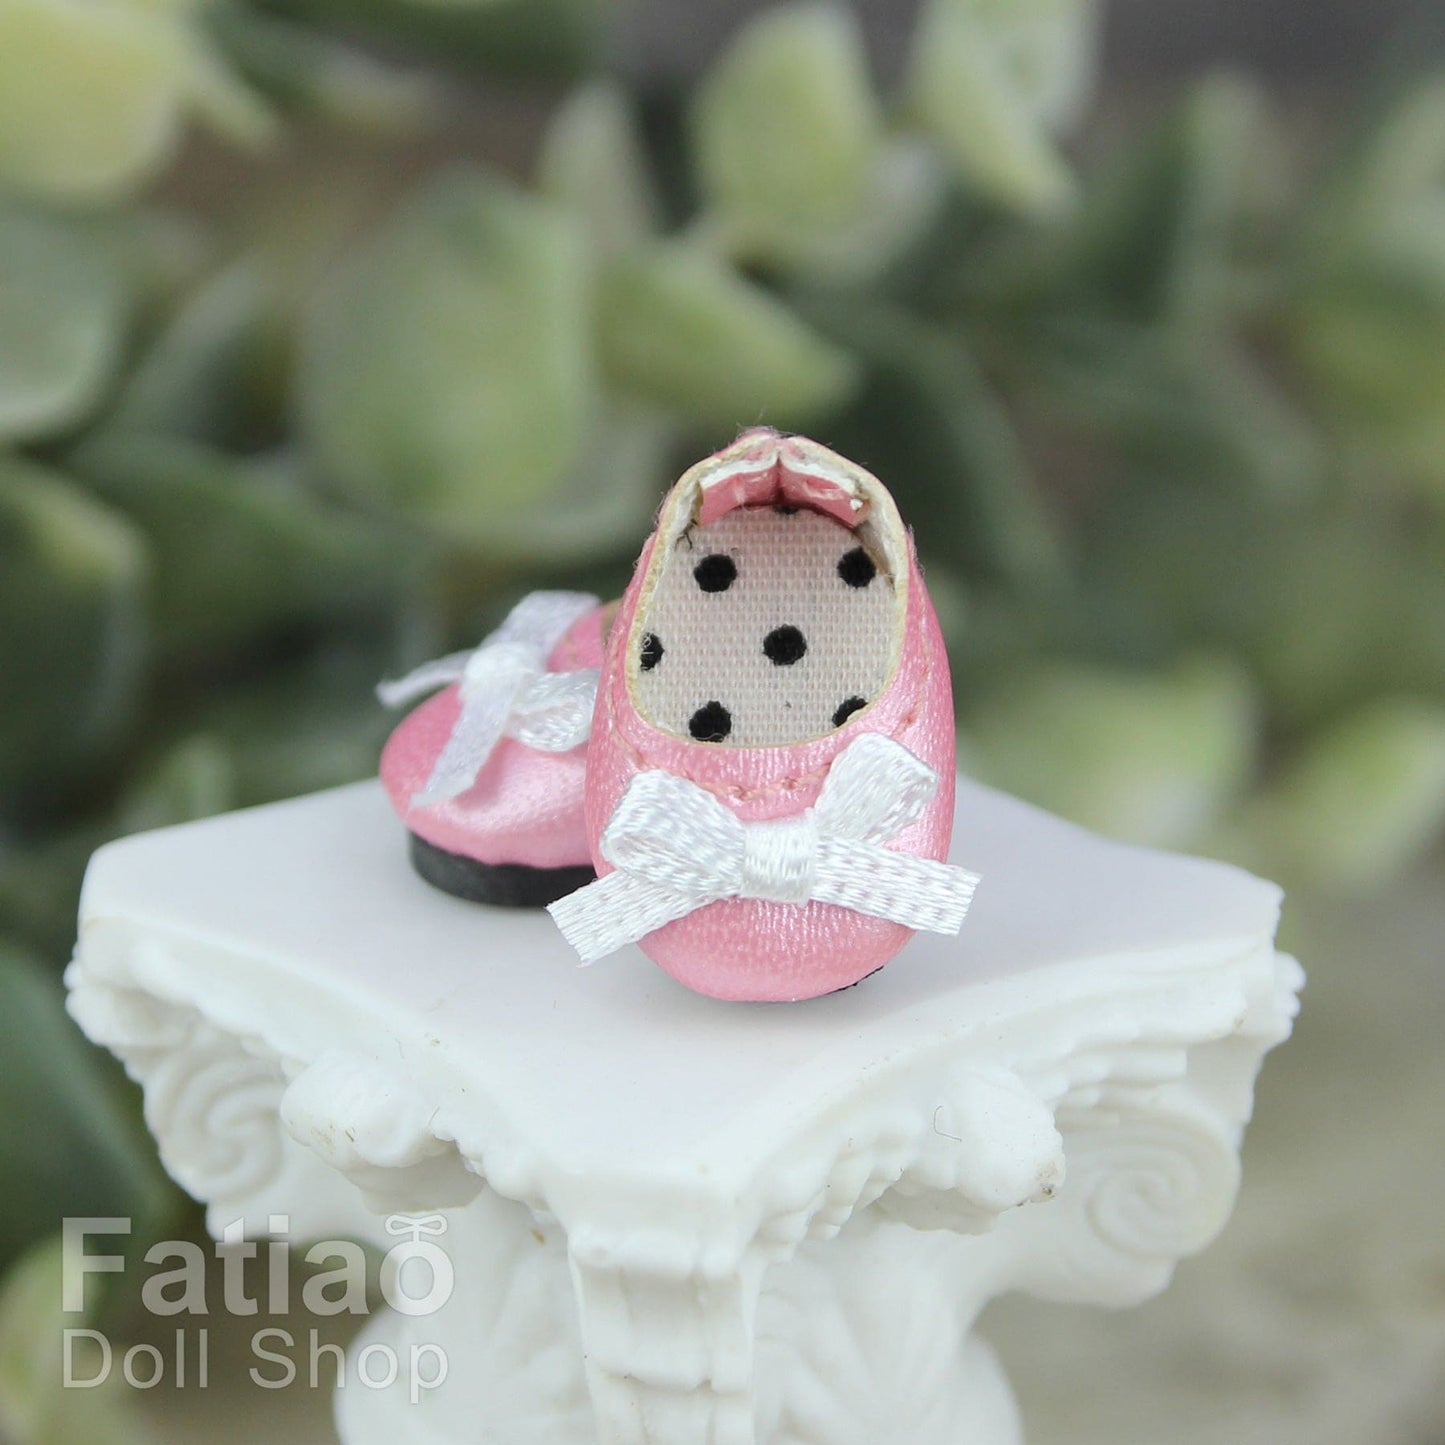 【Fatiao Doll Shop】蝴蝶結款娃娃鞋 / OB11 OBITSU cocoriang 黏土娃